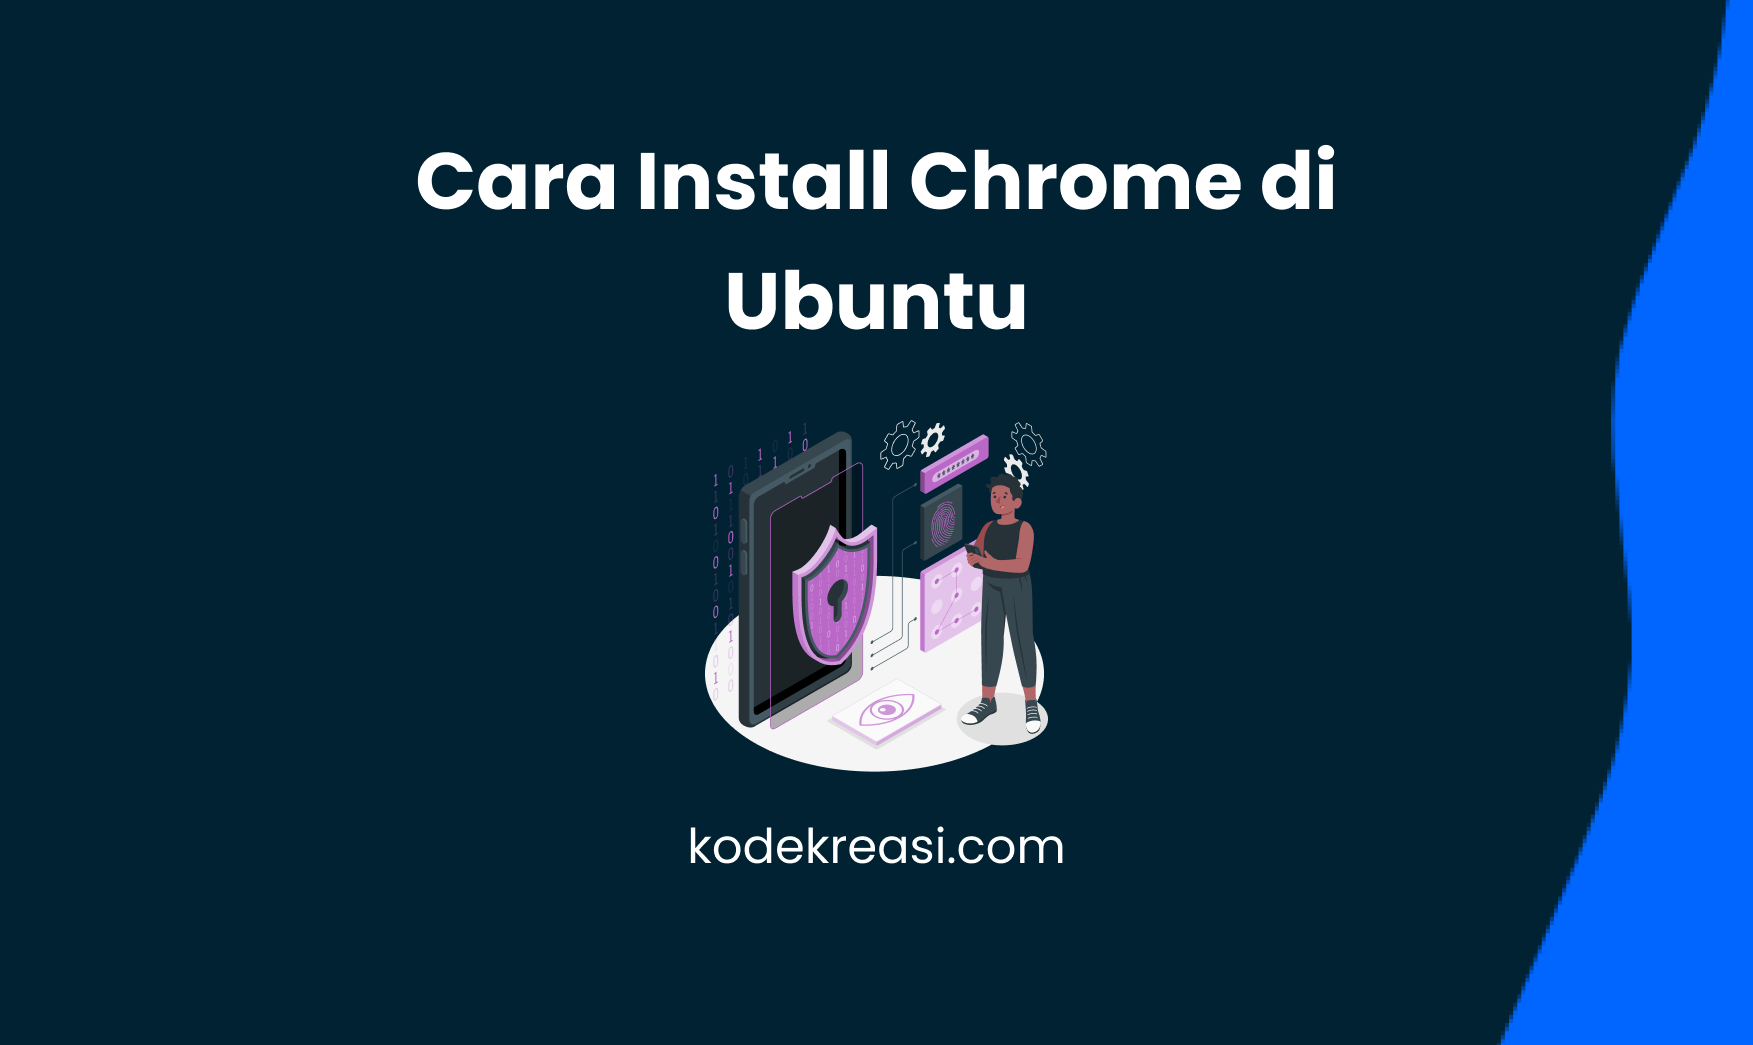 Cara Install Chrome di Ubuntu